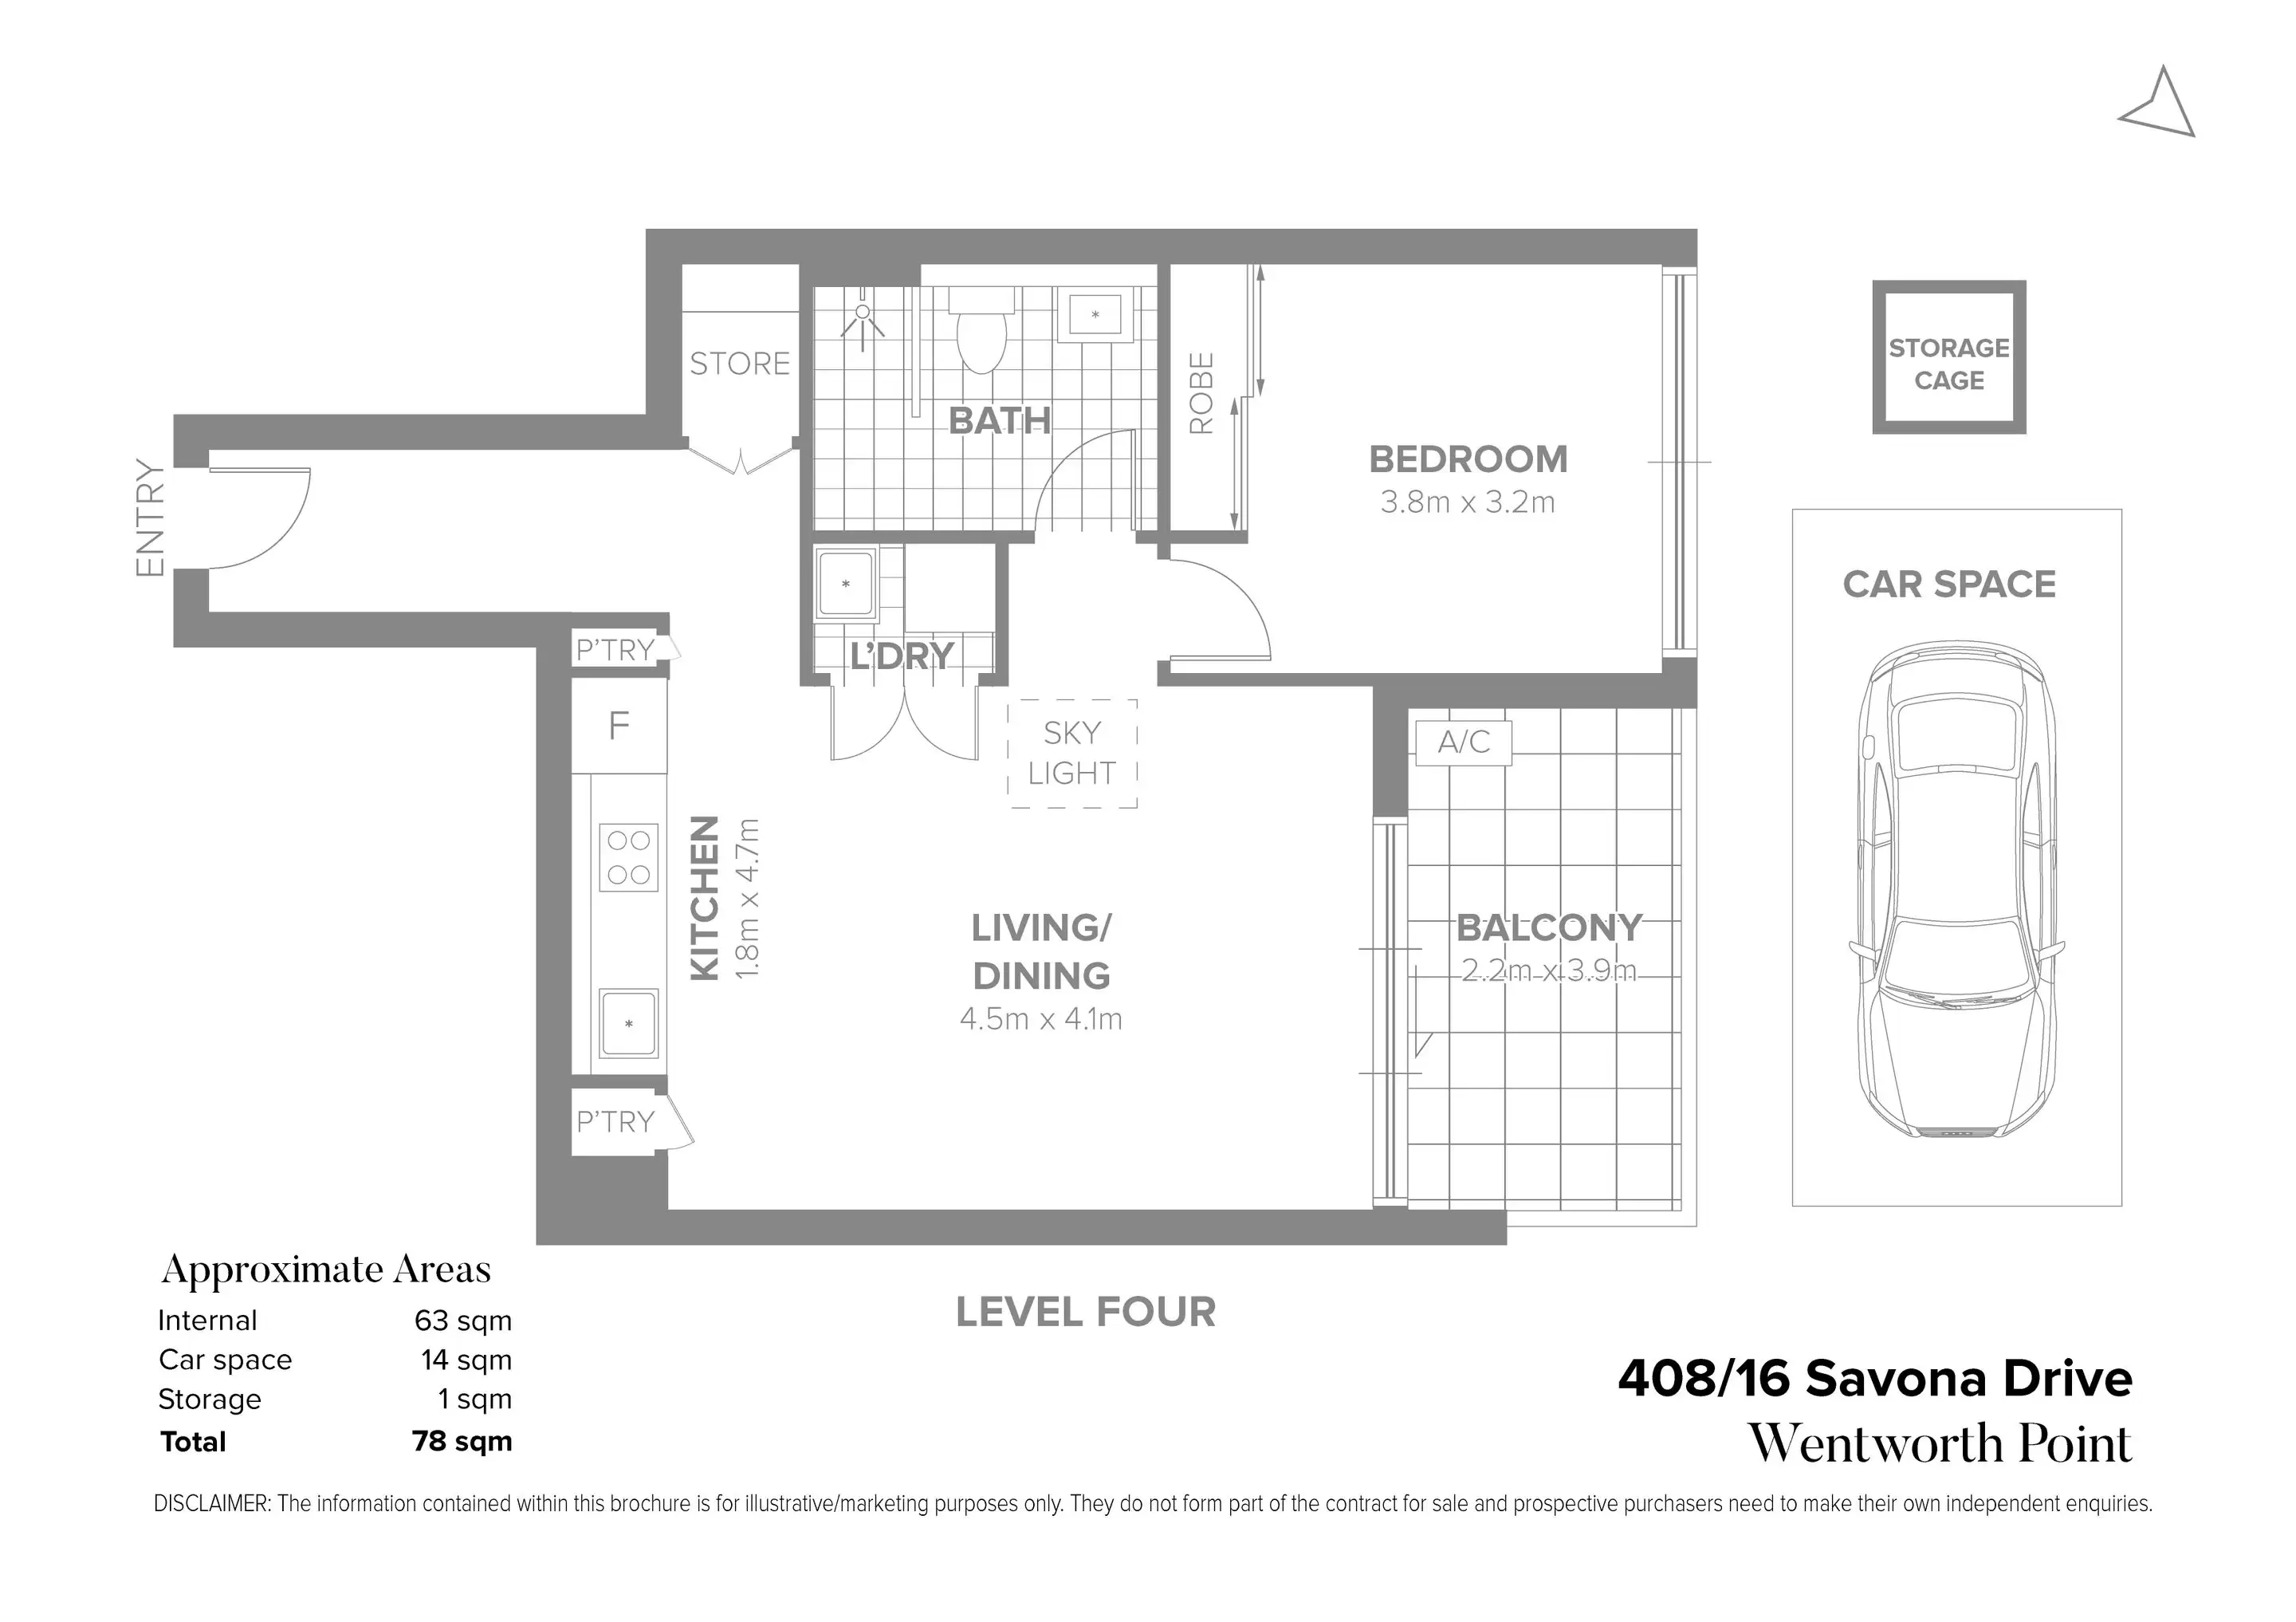 408/16 Savona Drive, Wentworth Point Sold by Chidiac Realty - floorplan